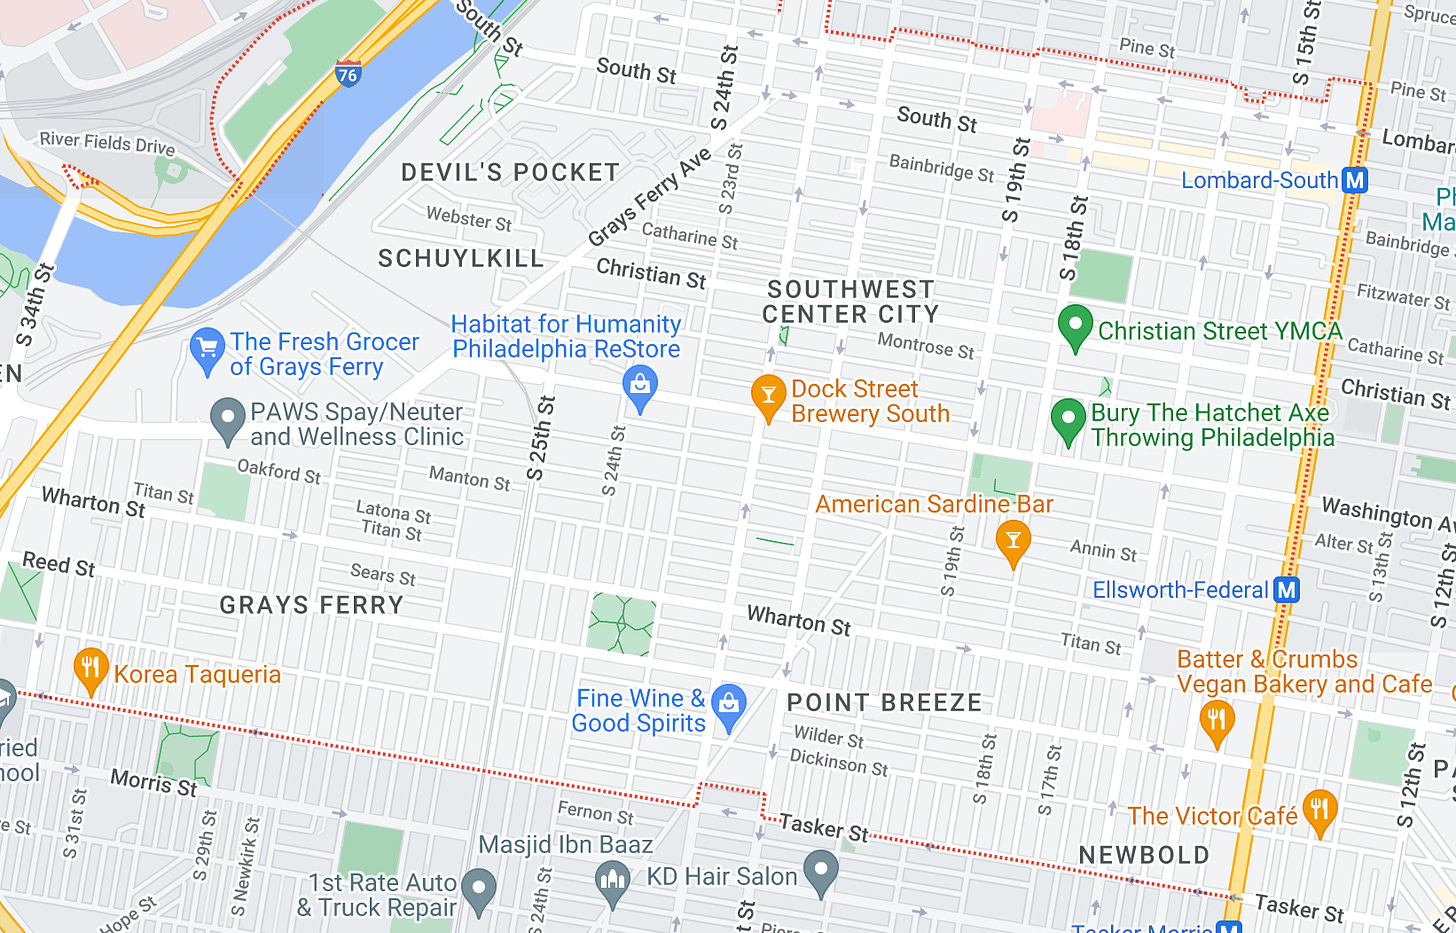 a standard google maps screenshot of a neighborhood in south philadelphia